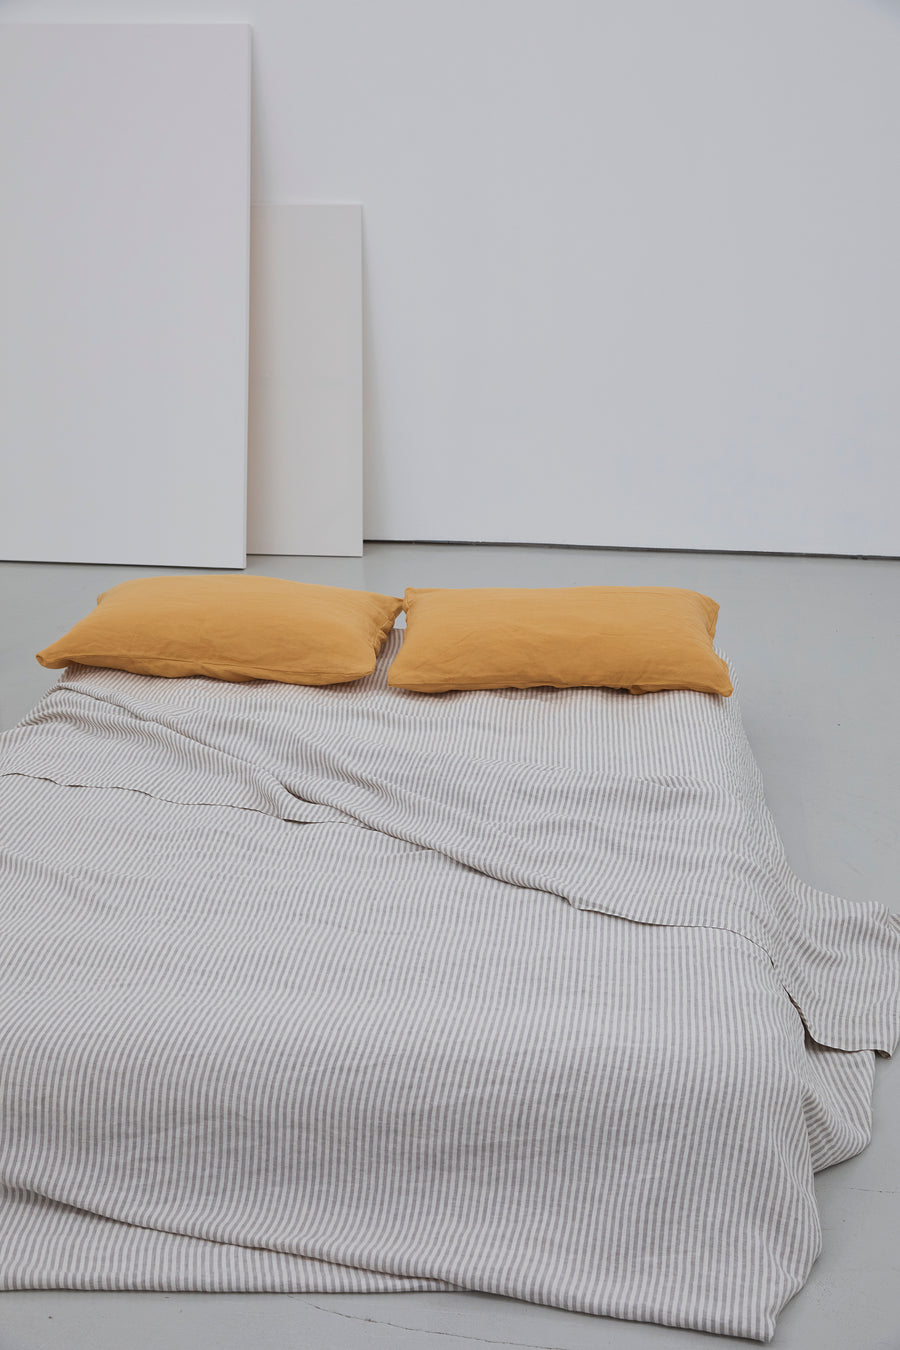 linen pillow slips by Deiji Studios in mustard